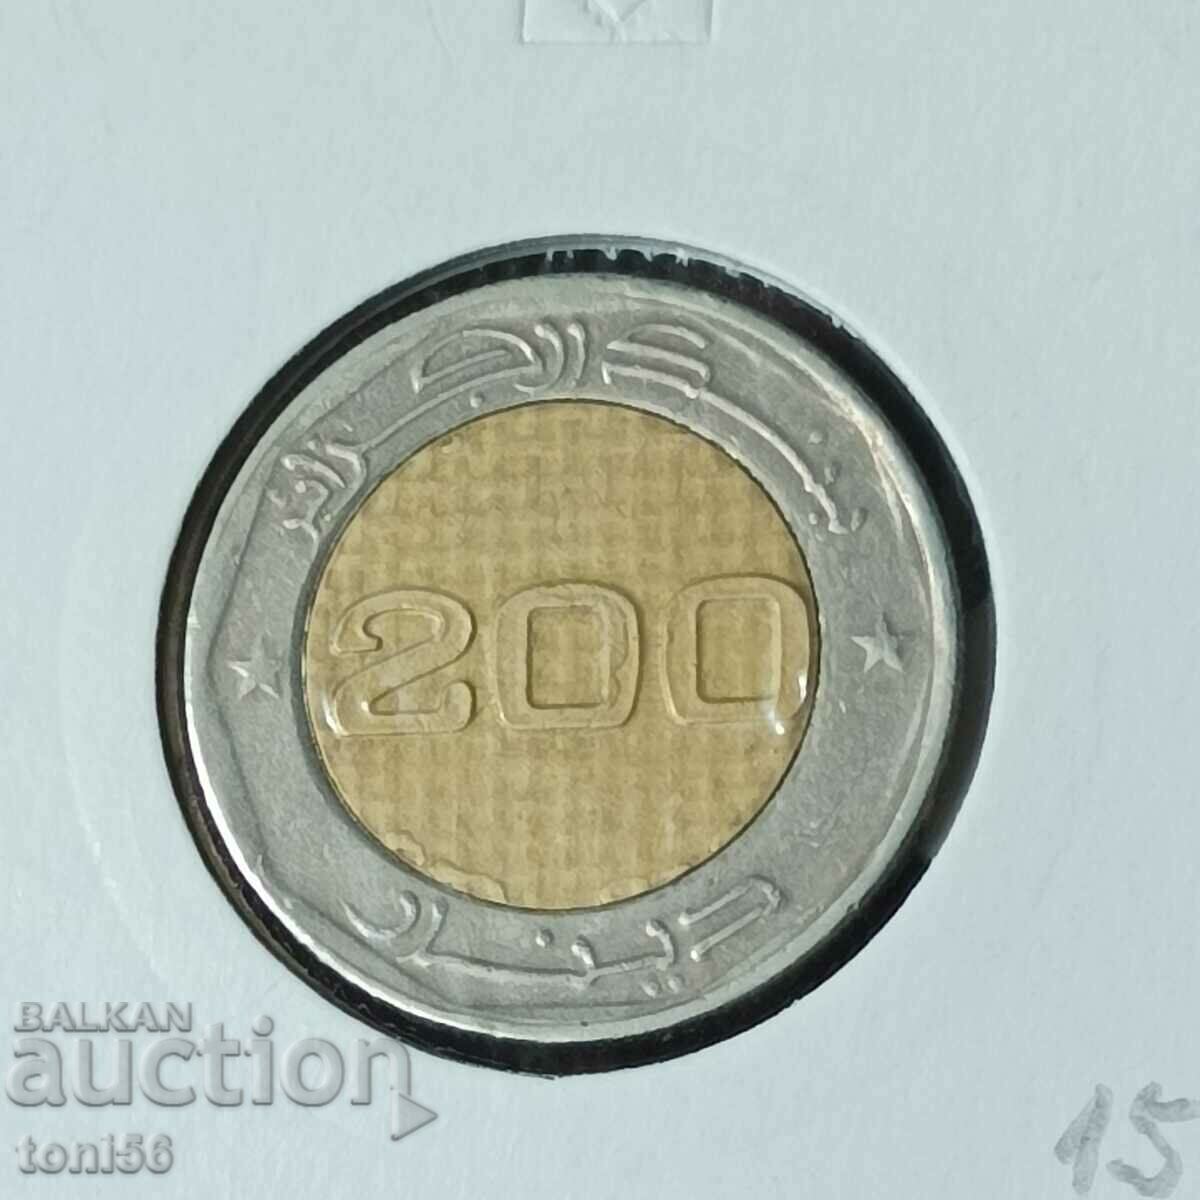 Algeria 200 dinars 2012